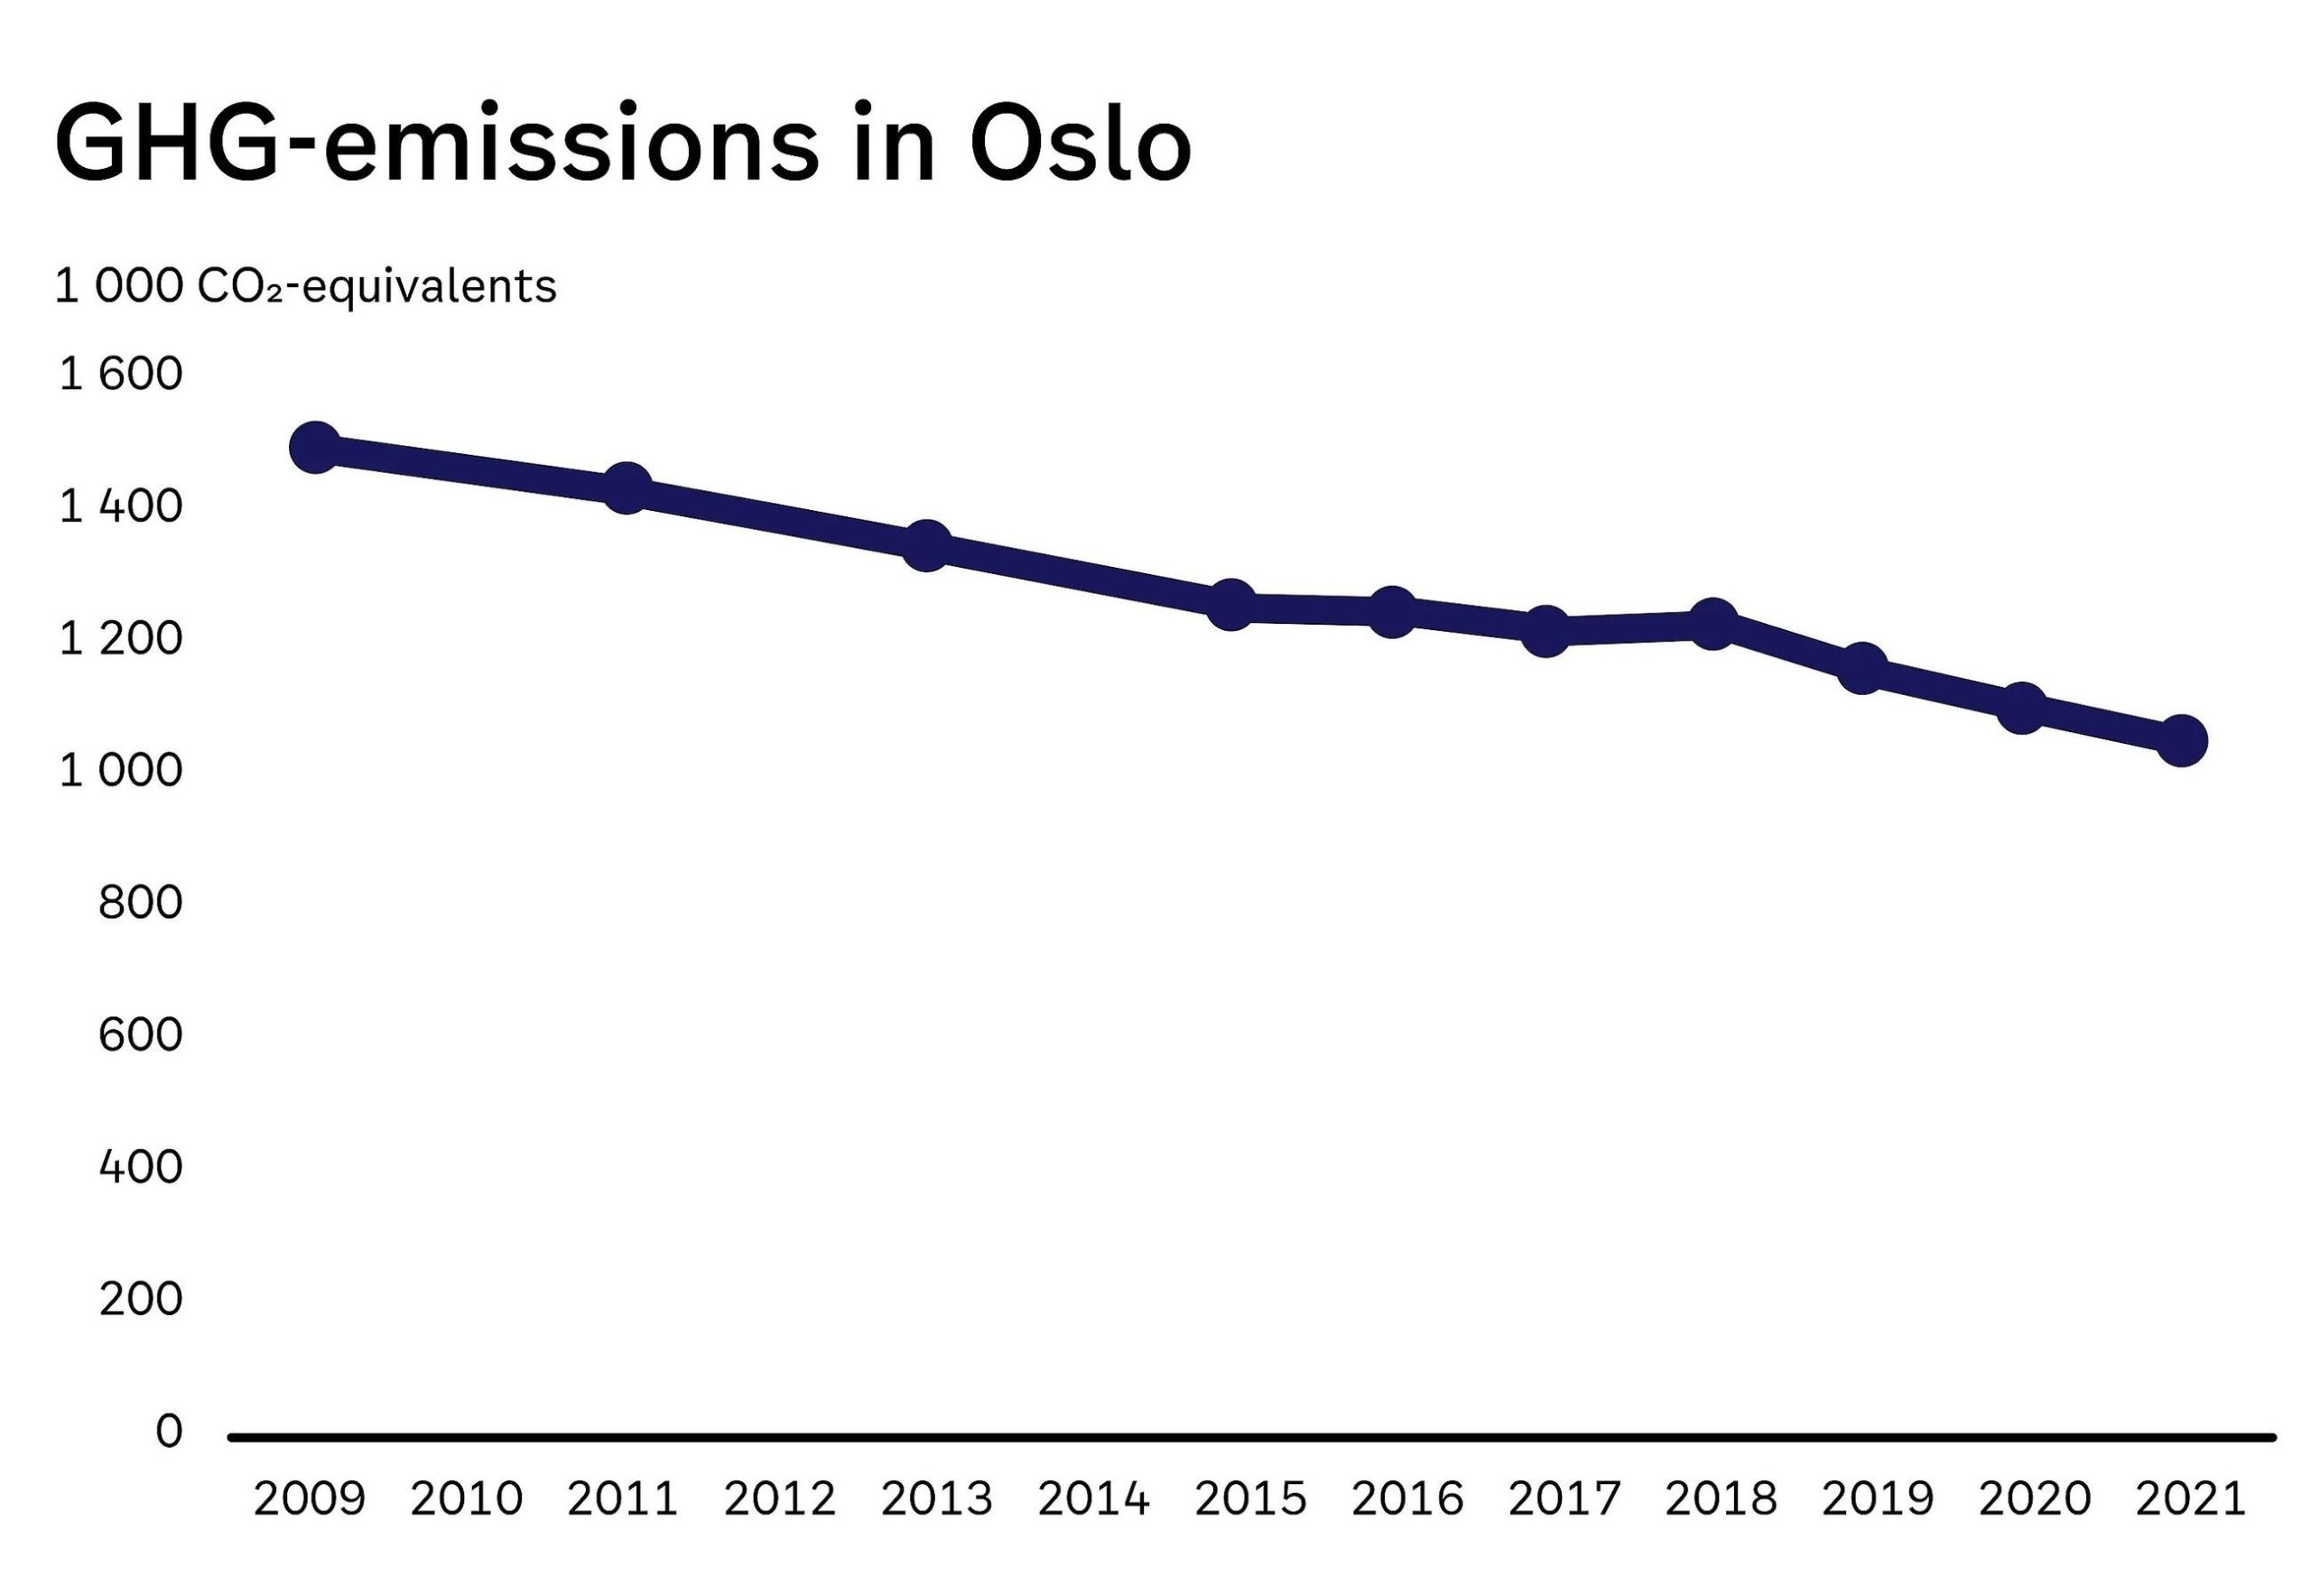 Figure: Total GHG-emissions in Oslo, 2009-2021